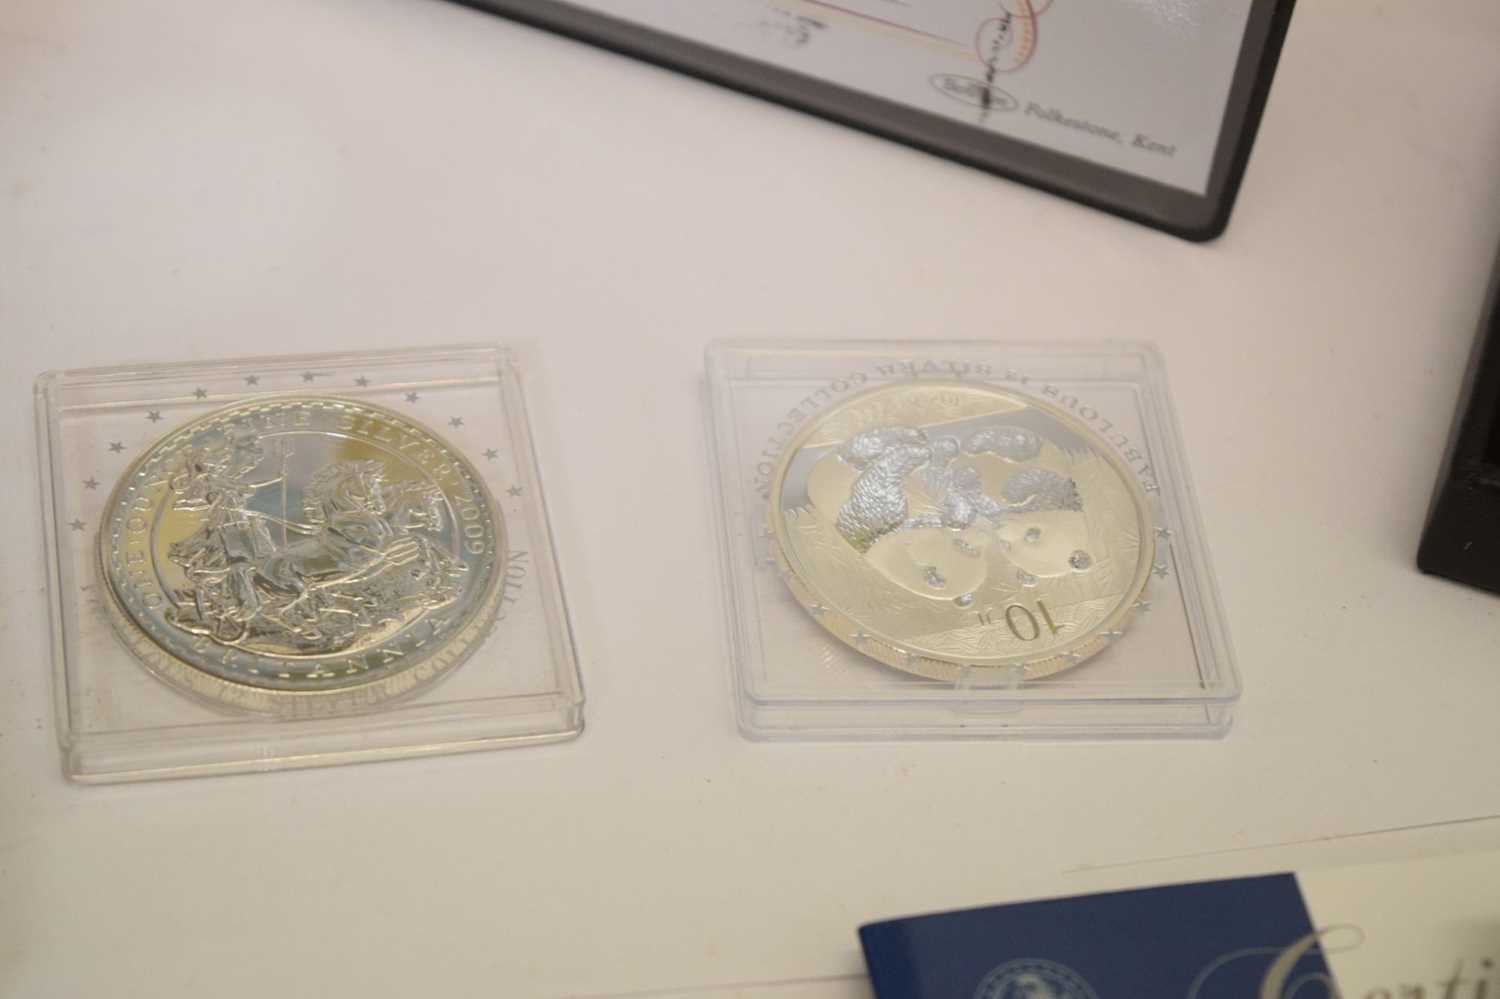 Six silver coins - Australian 1oz Kangaroo Road Sign $1 2013, etc - Bild 4 aus 7